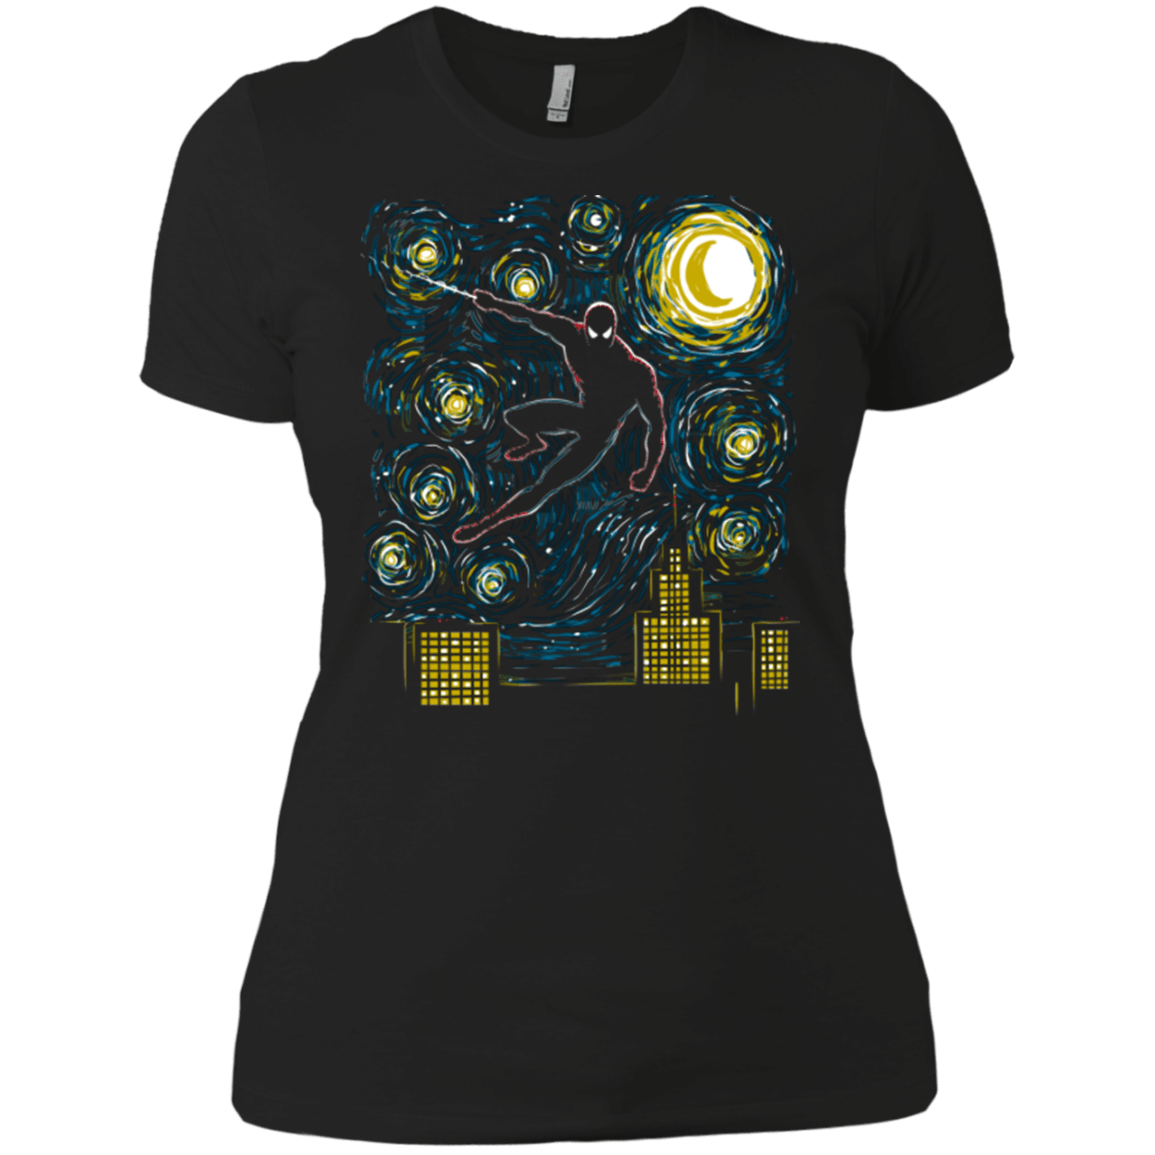 Starry Spider Women's Premium T-Shirt